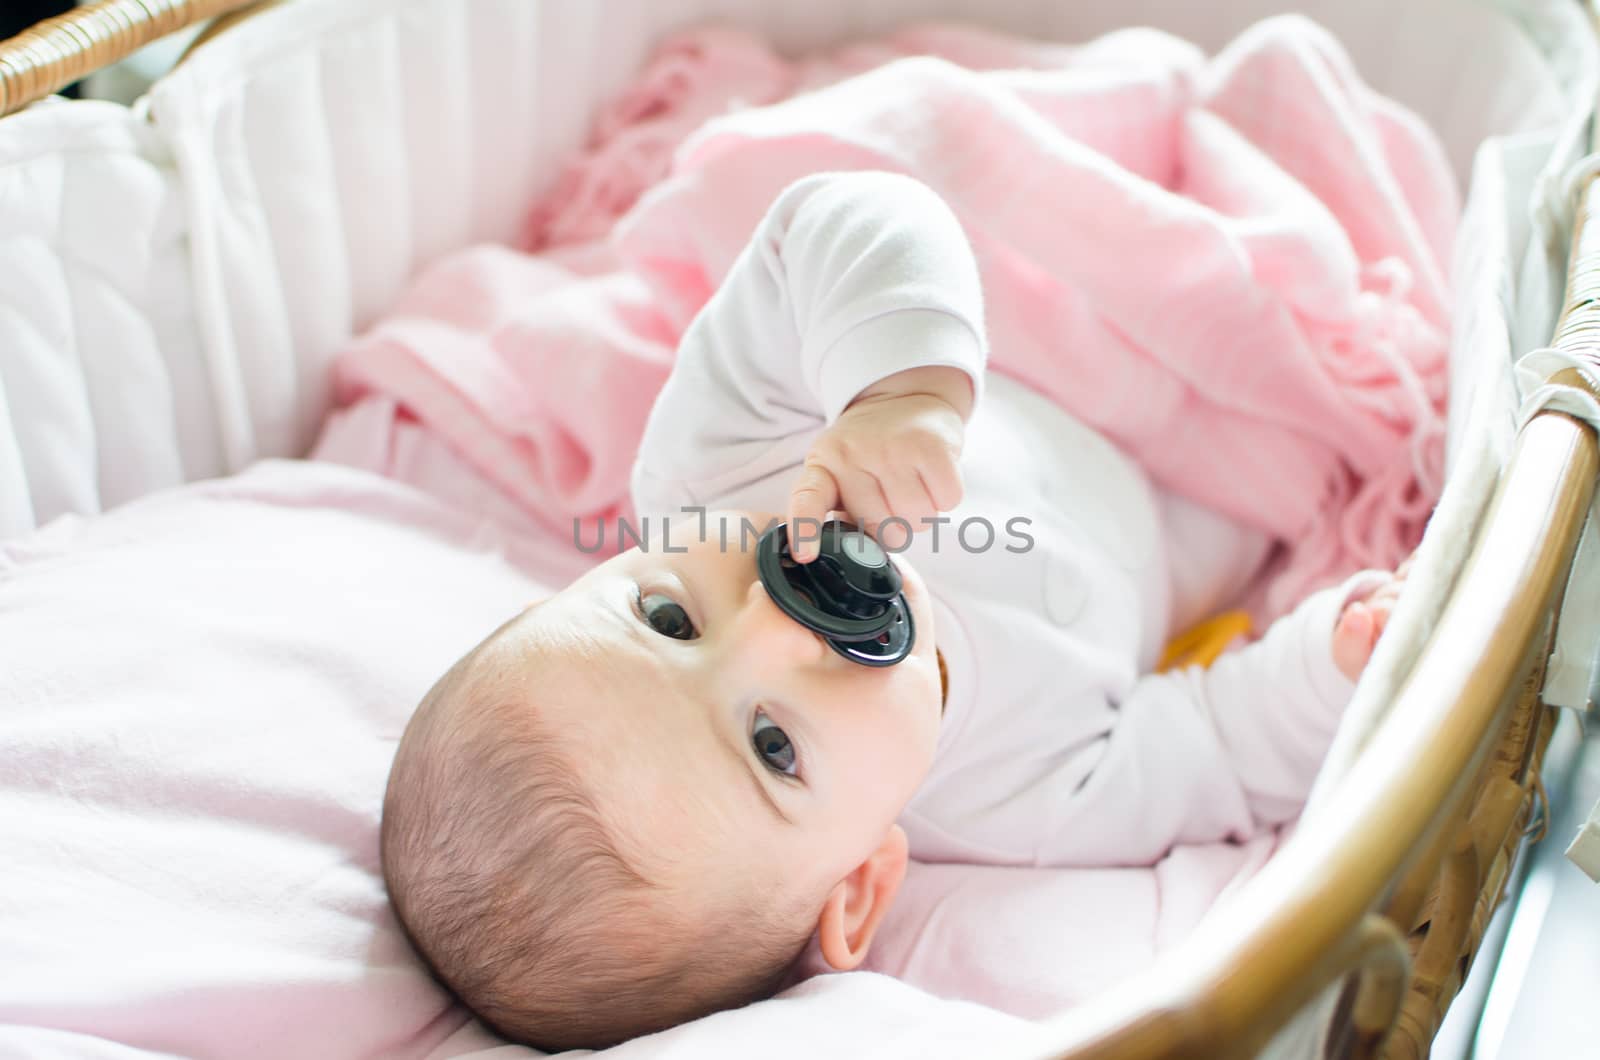 newborn pink cradle hold black pacifier hand